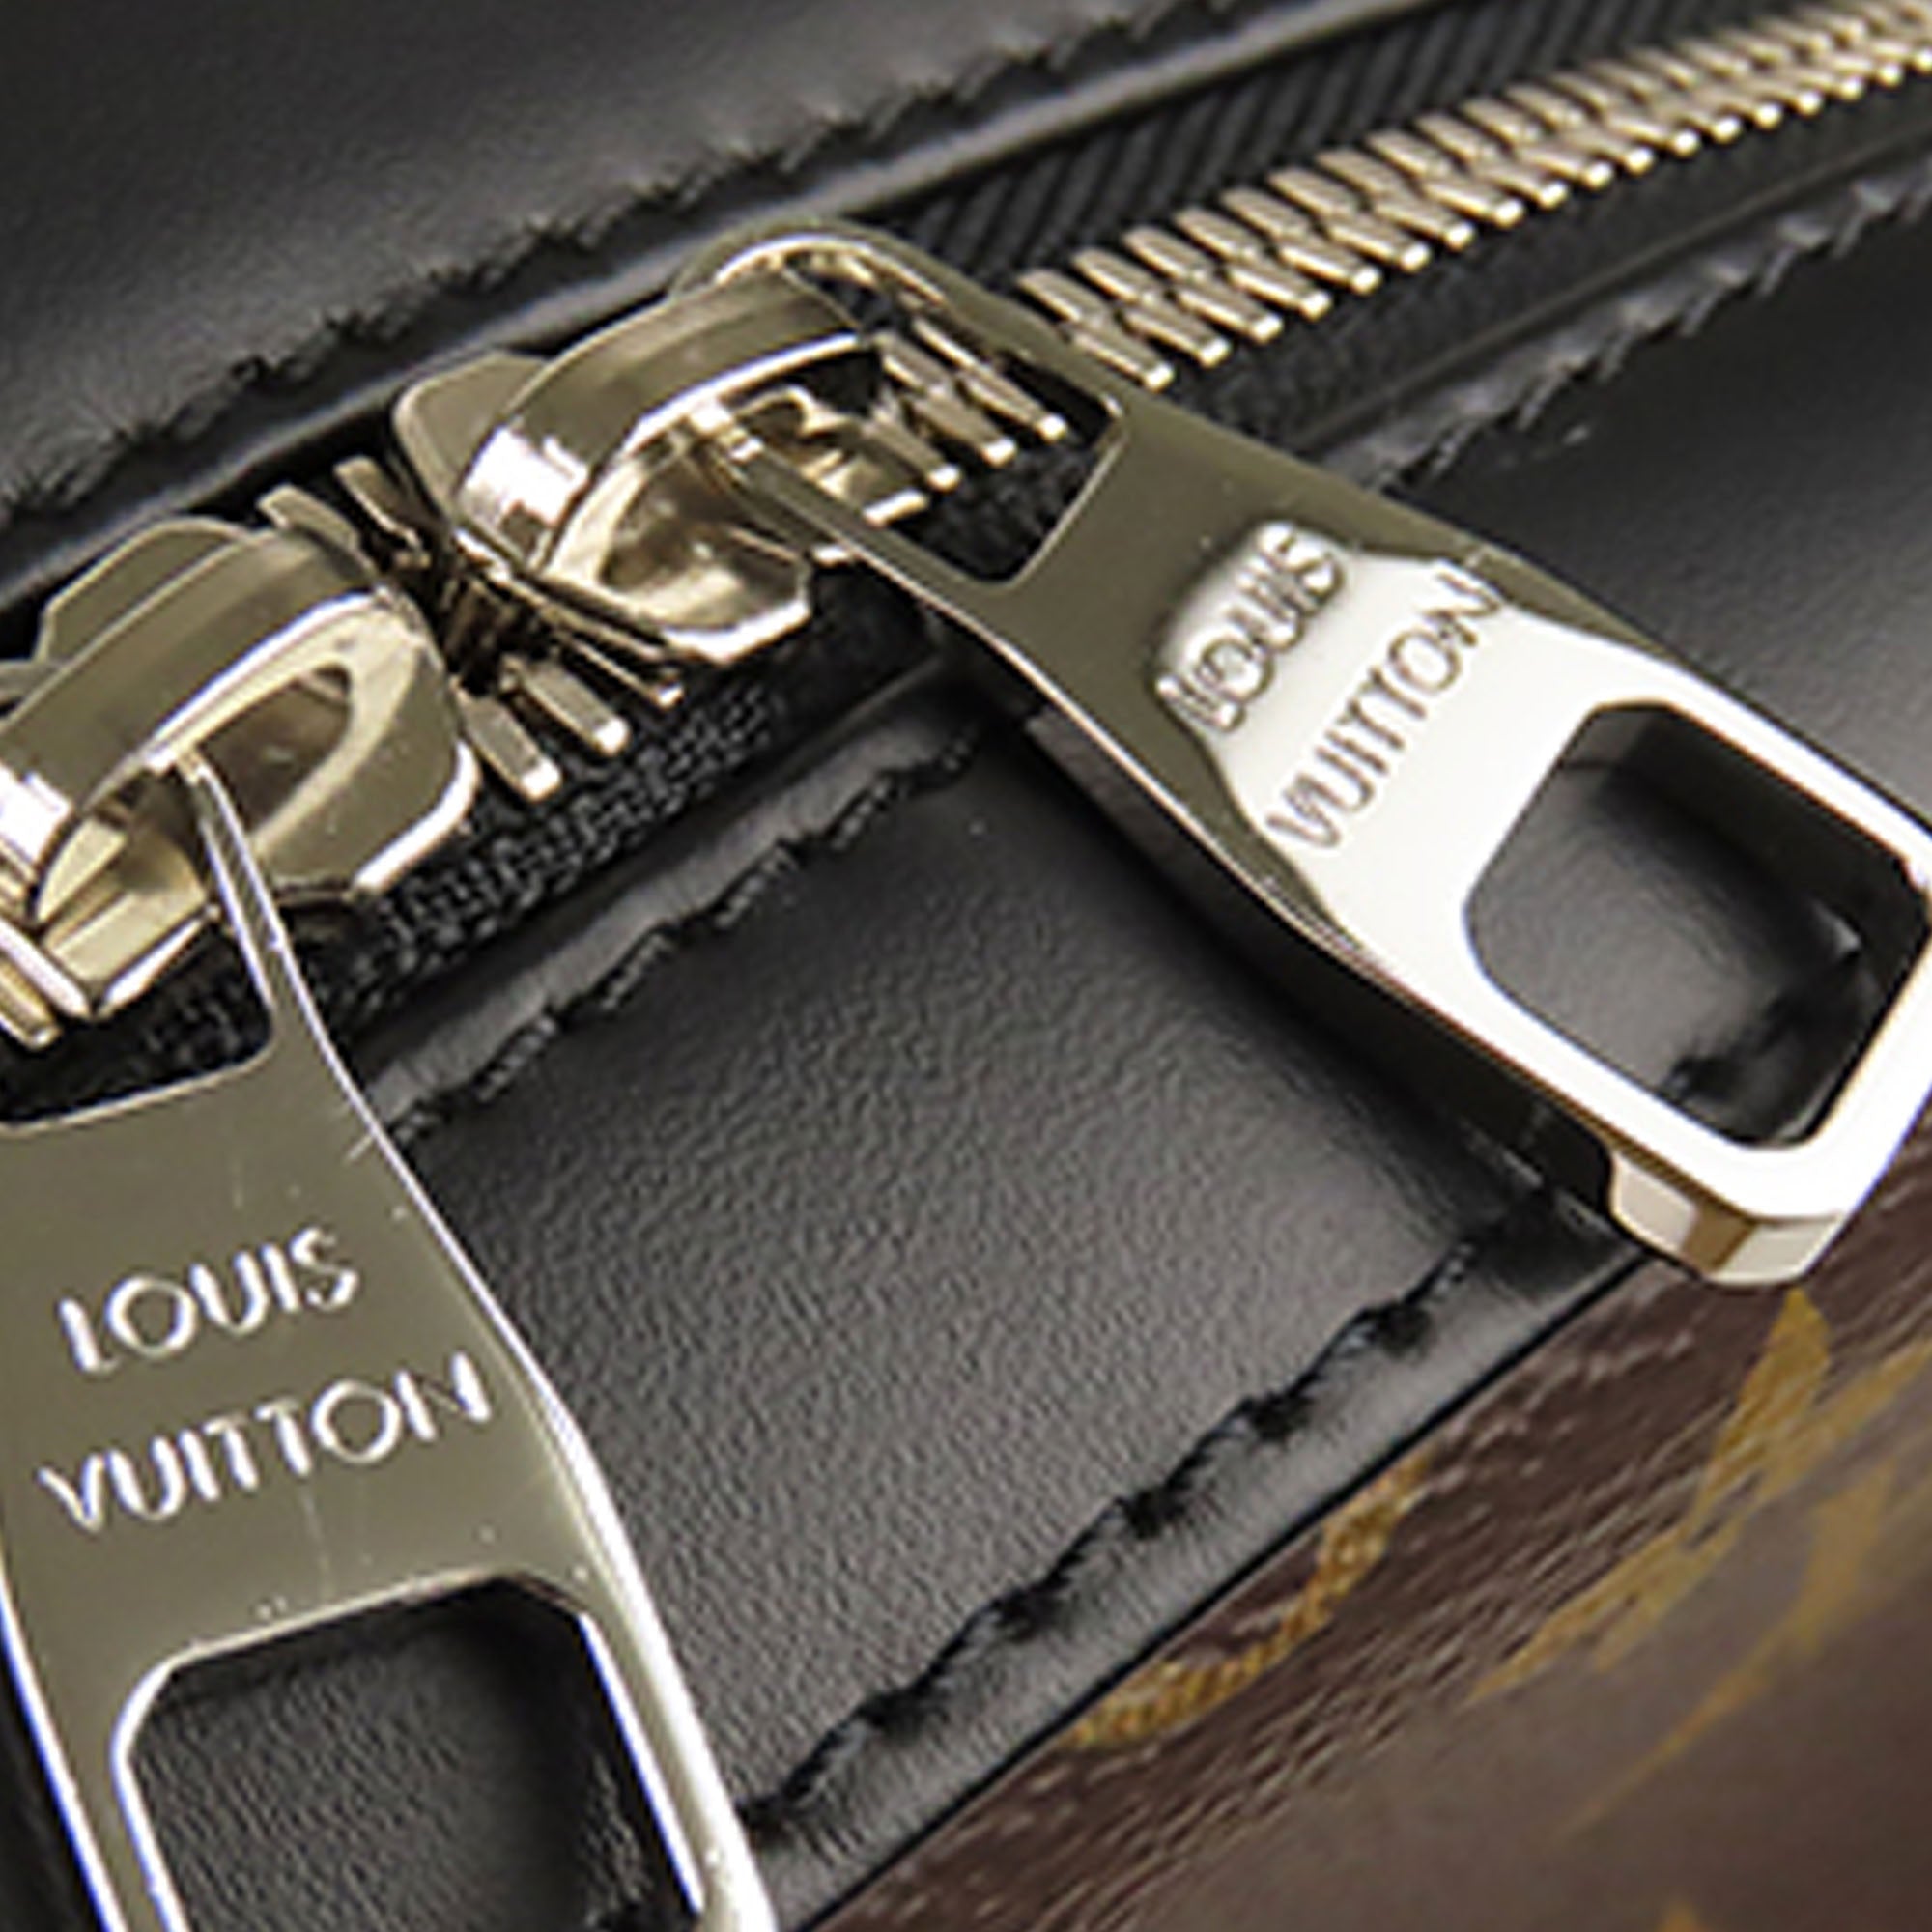 Shop Louis Vuitton Josh backpack (M45349) by 環-WA